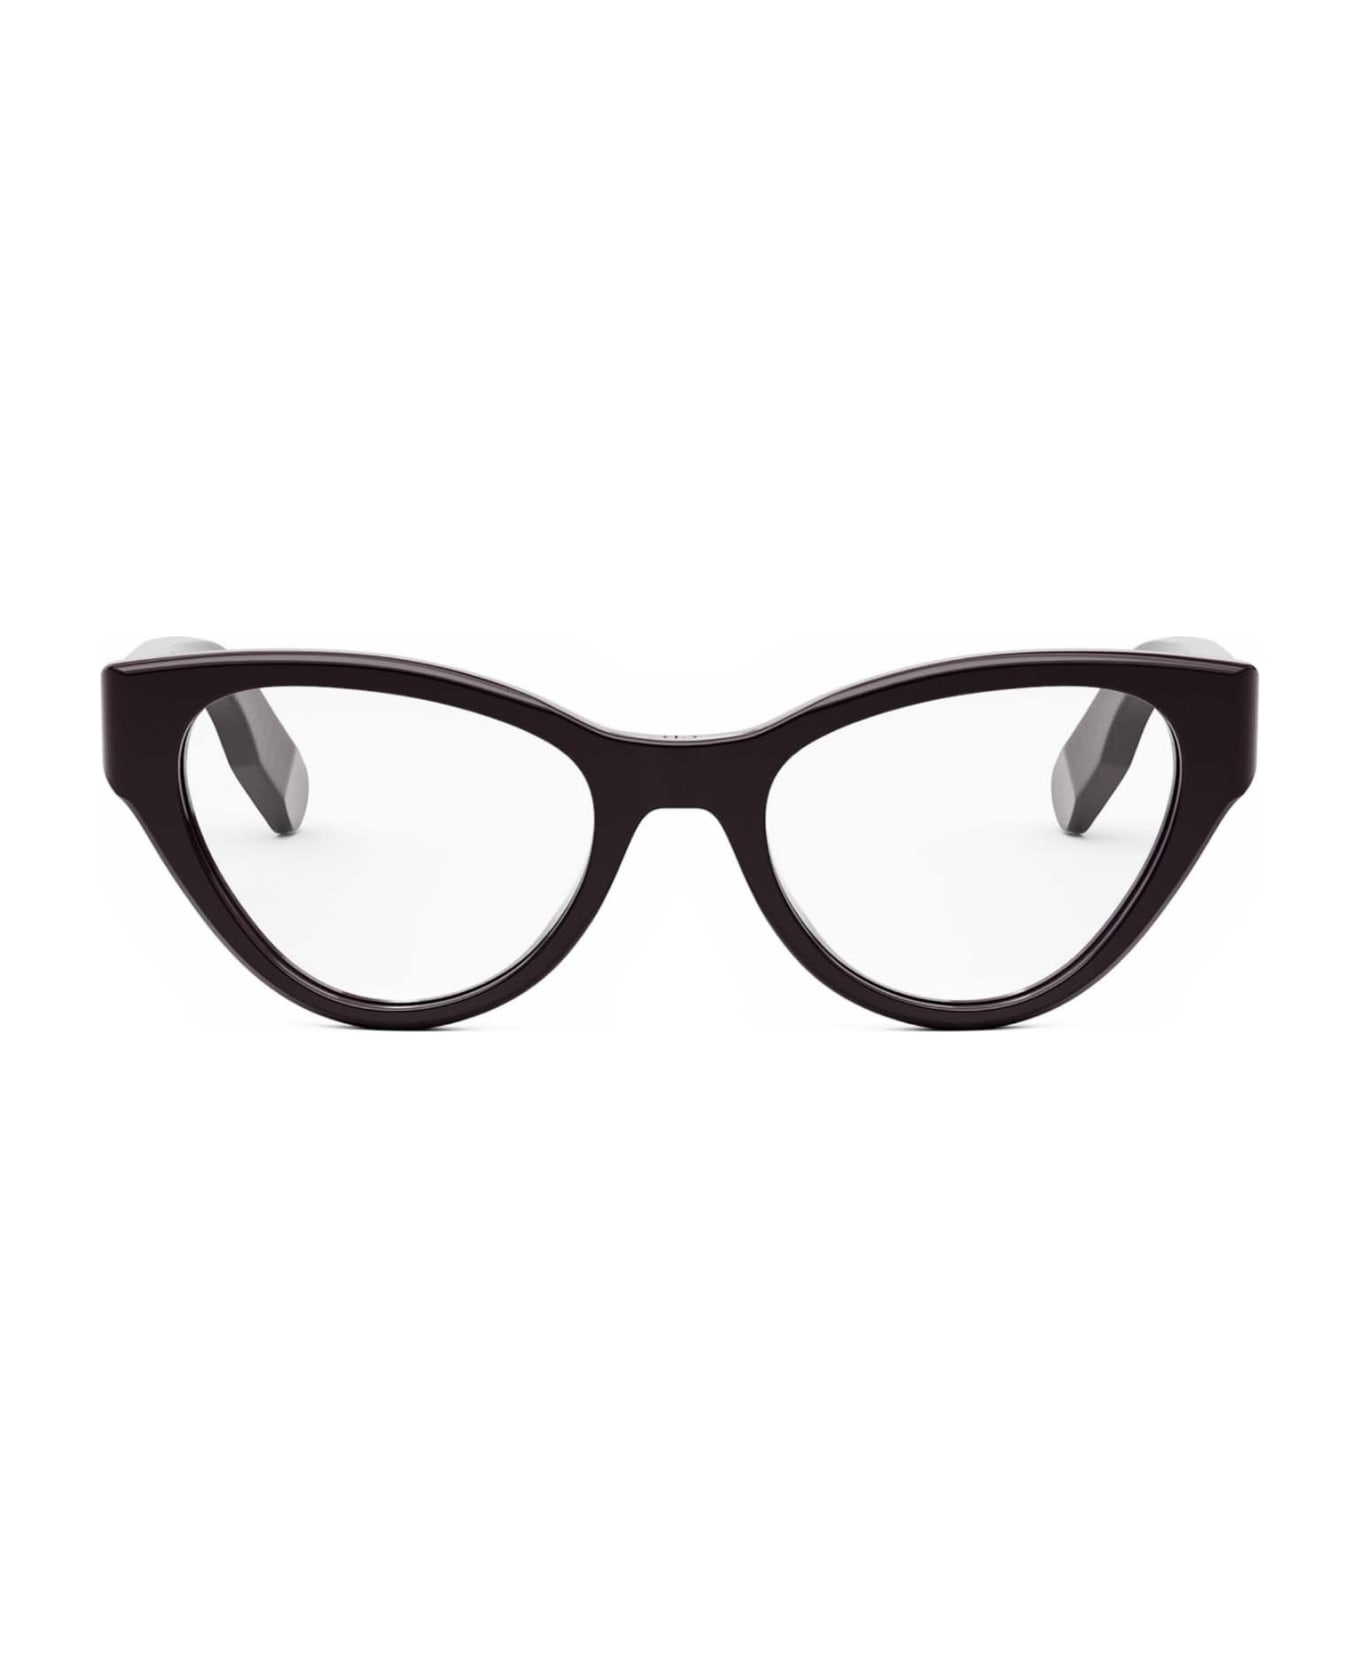 Dior Eyewear Glasses - Bordeaux